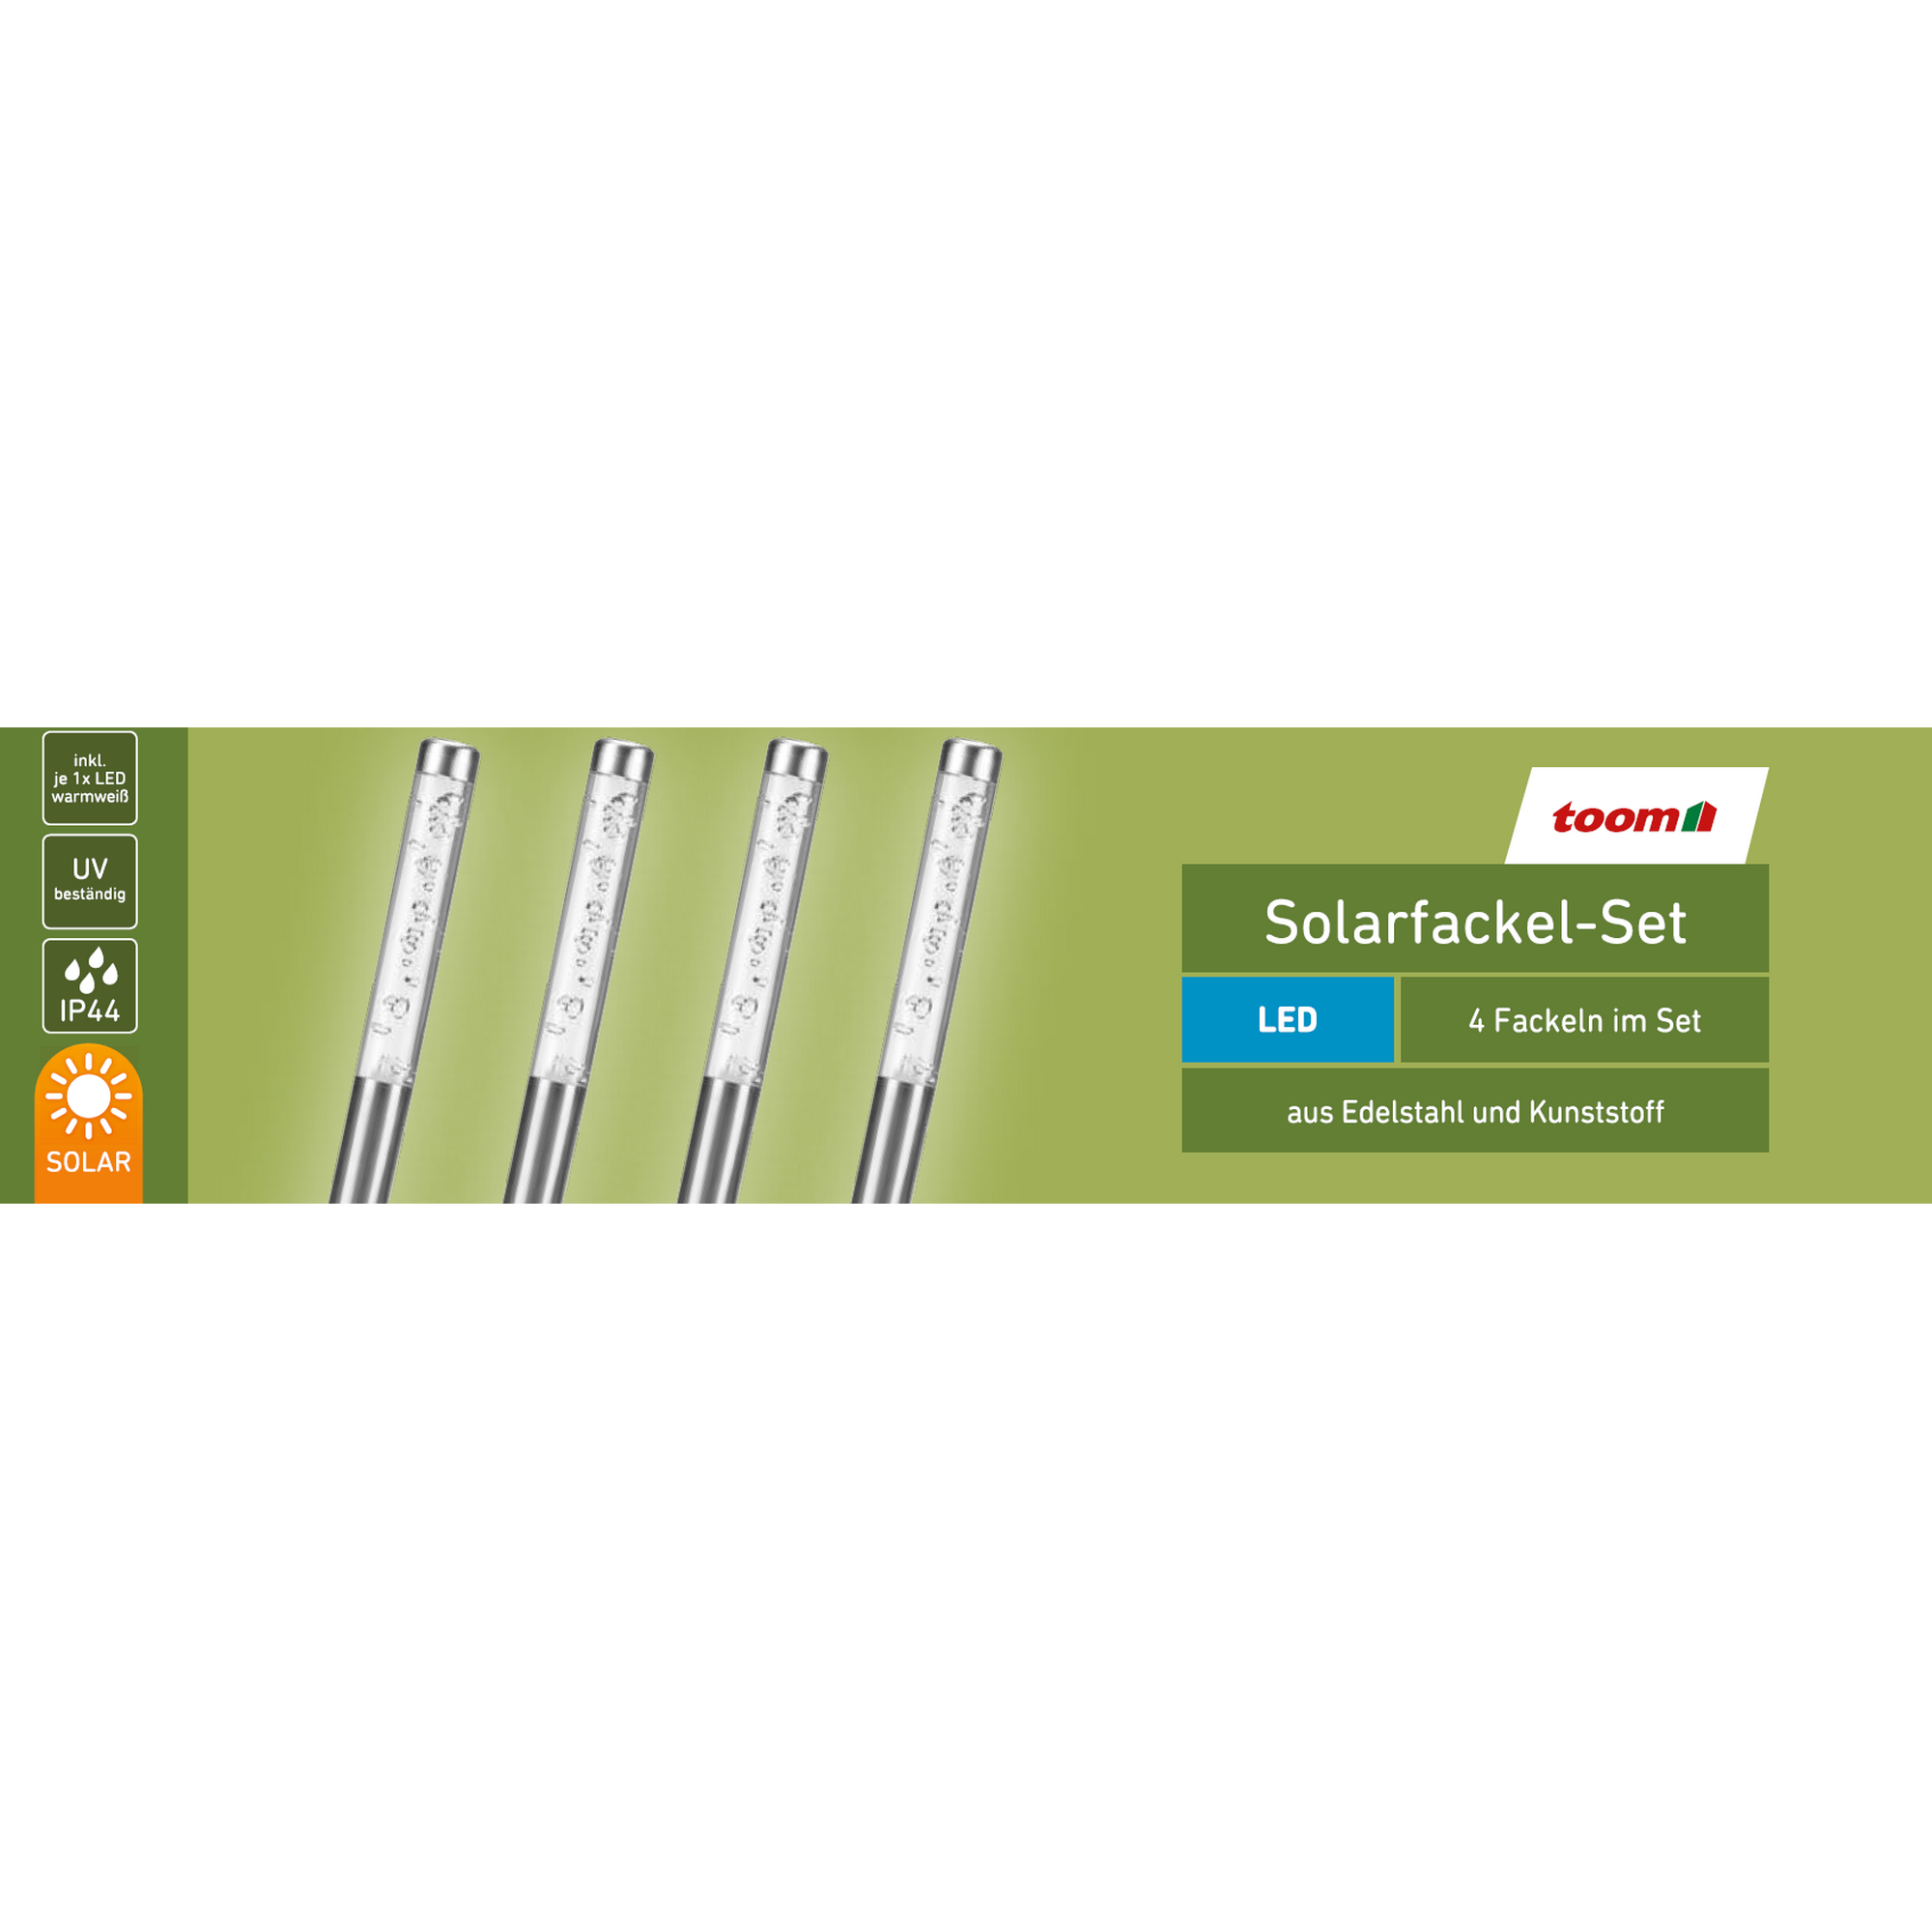 LED-Solarfackel-Set silbern 39,5 cm, 4 Stück + product picture